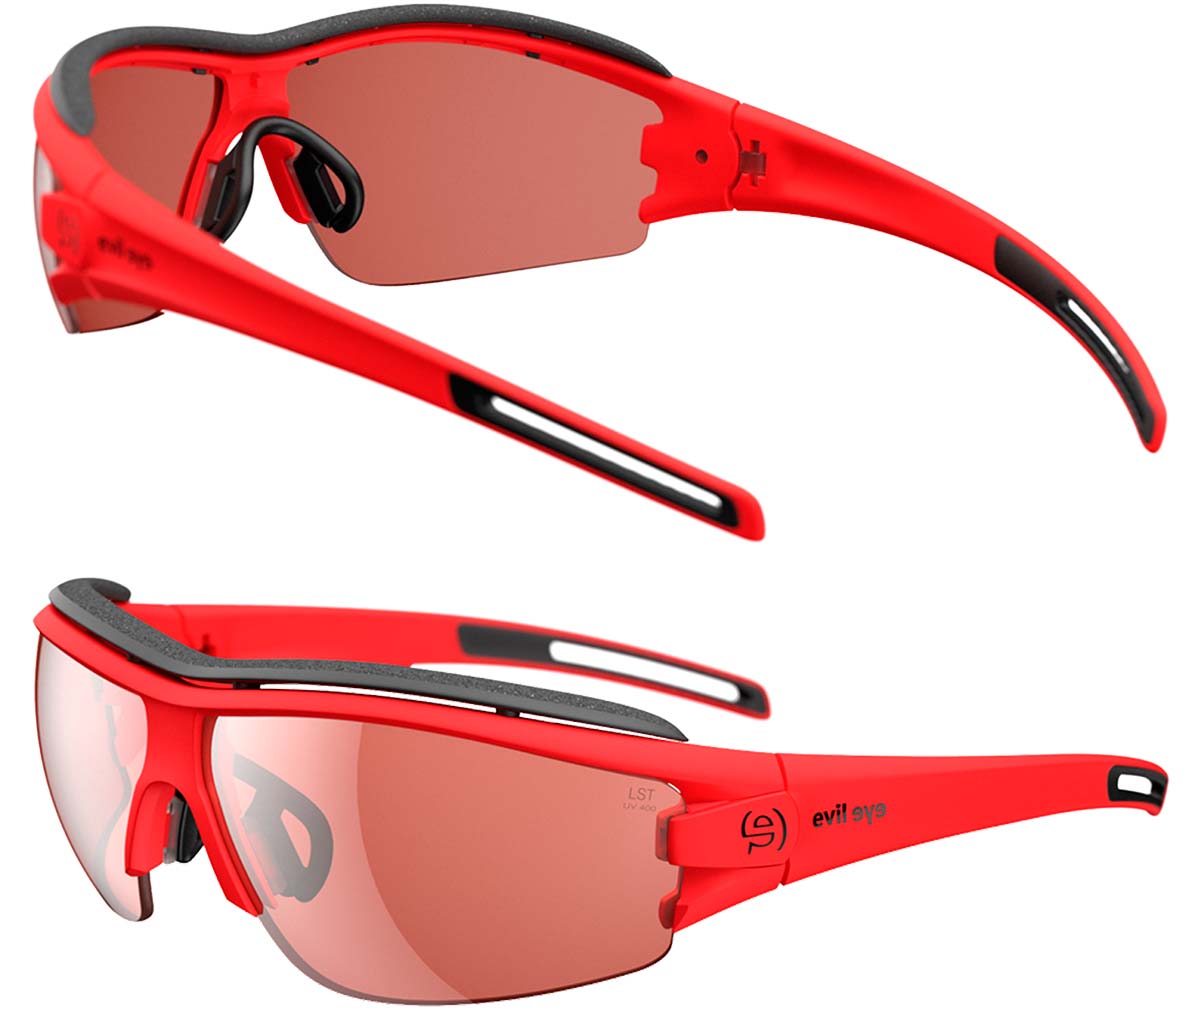 En TodoMountainBike: Silhouette International presenta Evil Eye, su nueva marca de gafas deportivas